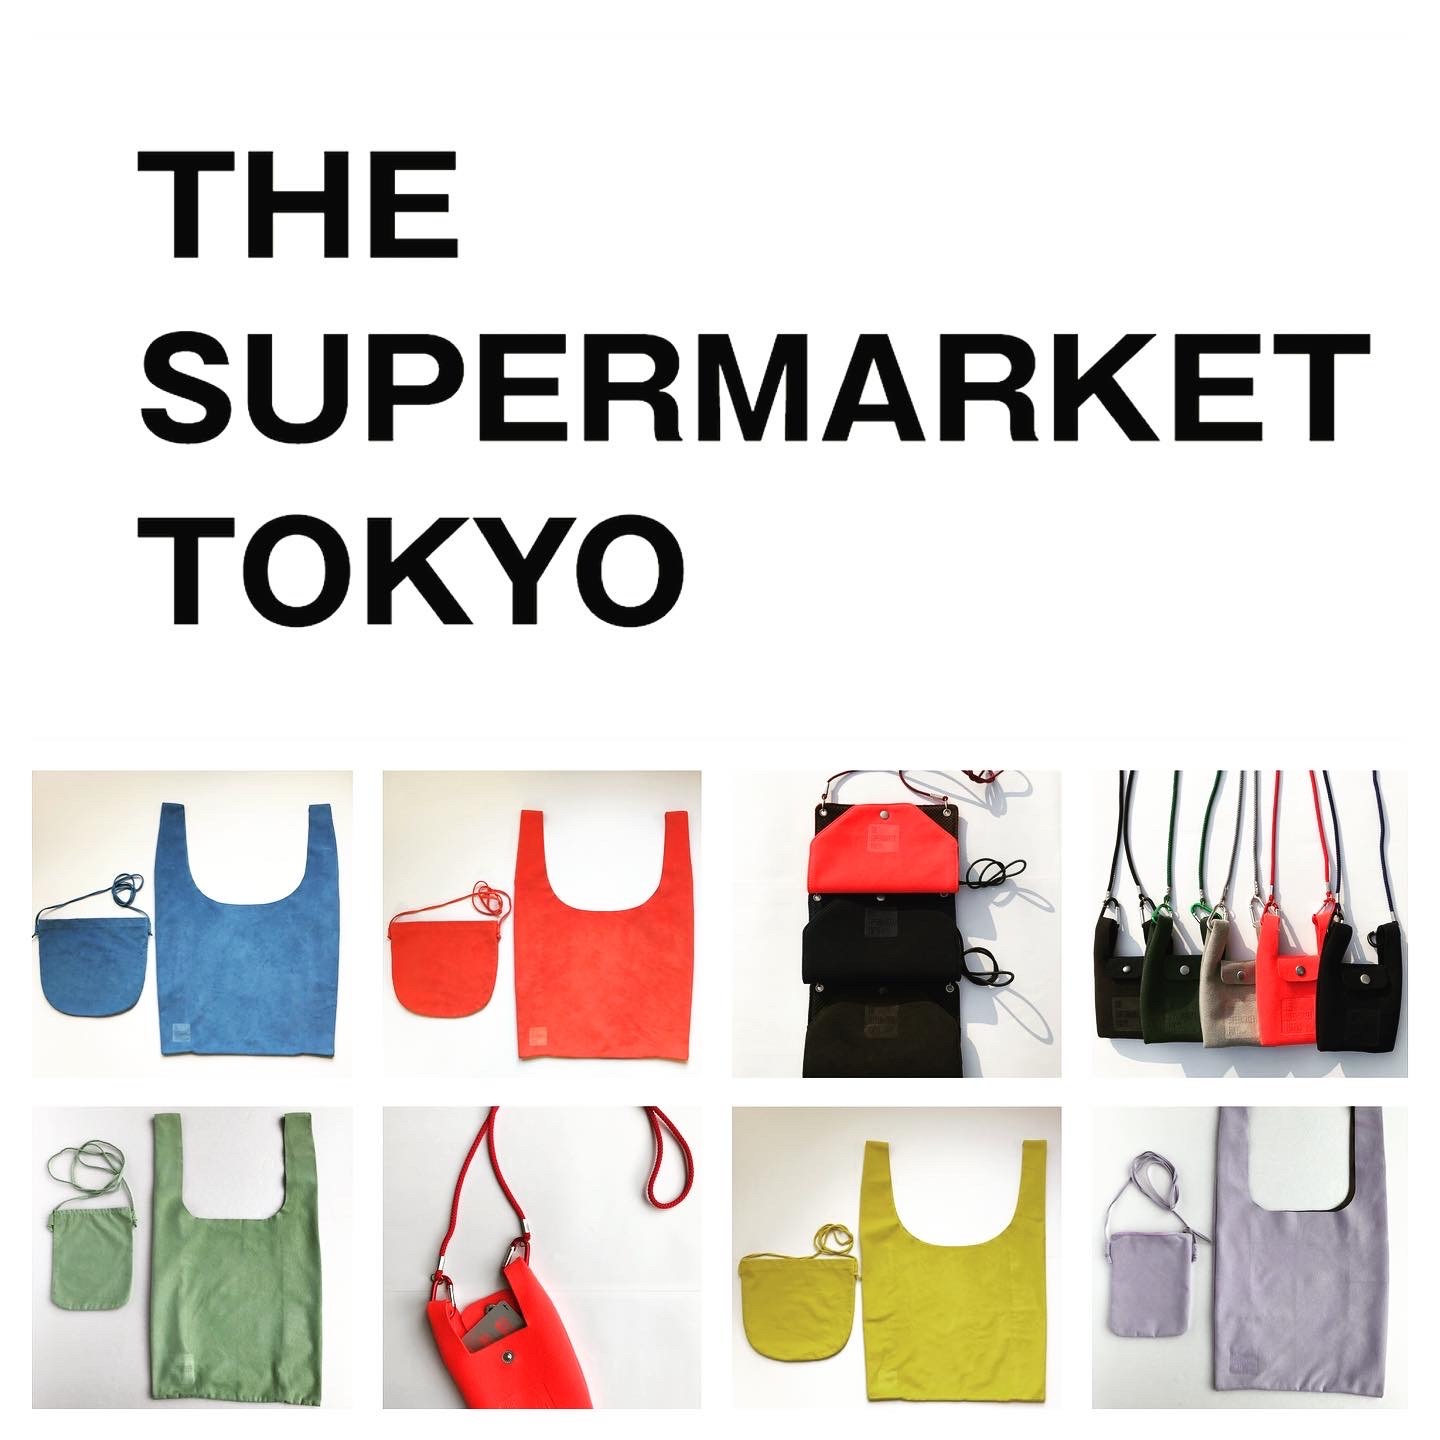 TXeiuuh[THE SUPERMARKET TOKYO]A[PORTRUNKS]̔̂BtoBvbgtH[[goooods]ɎQ